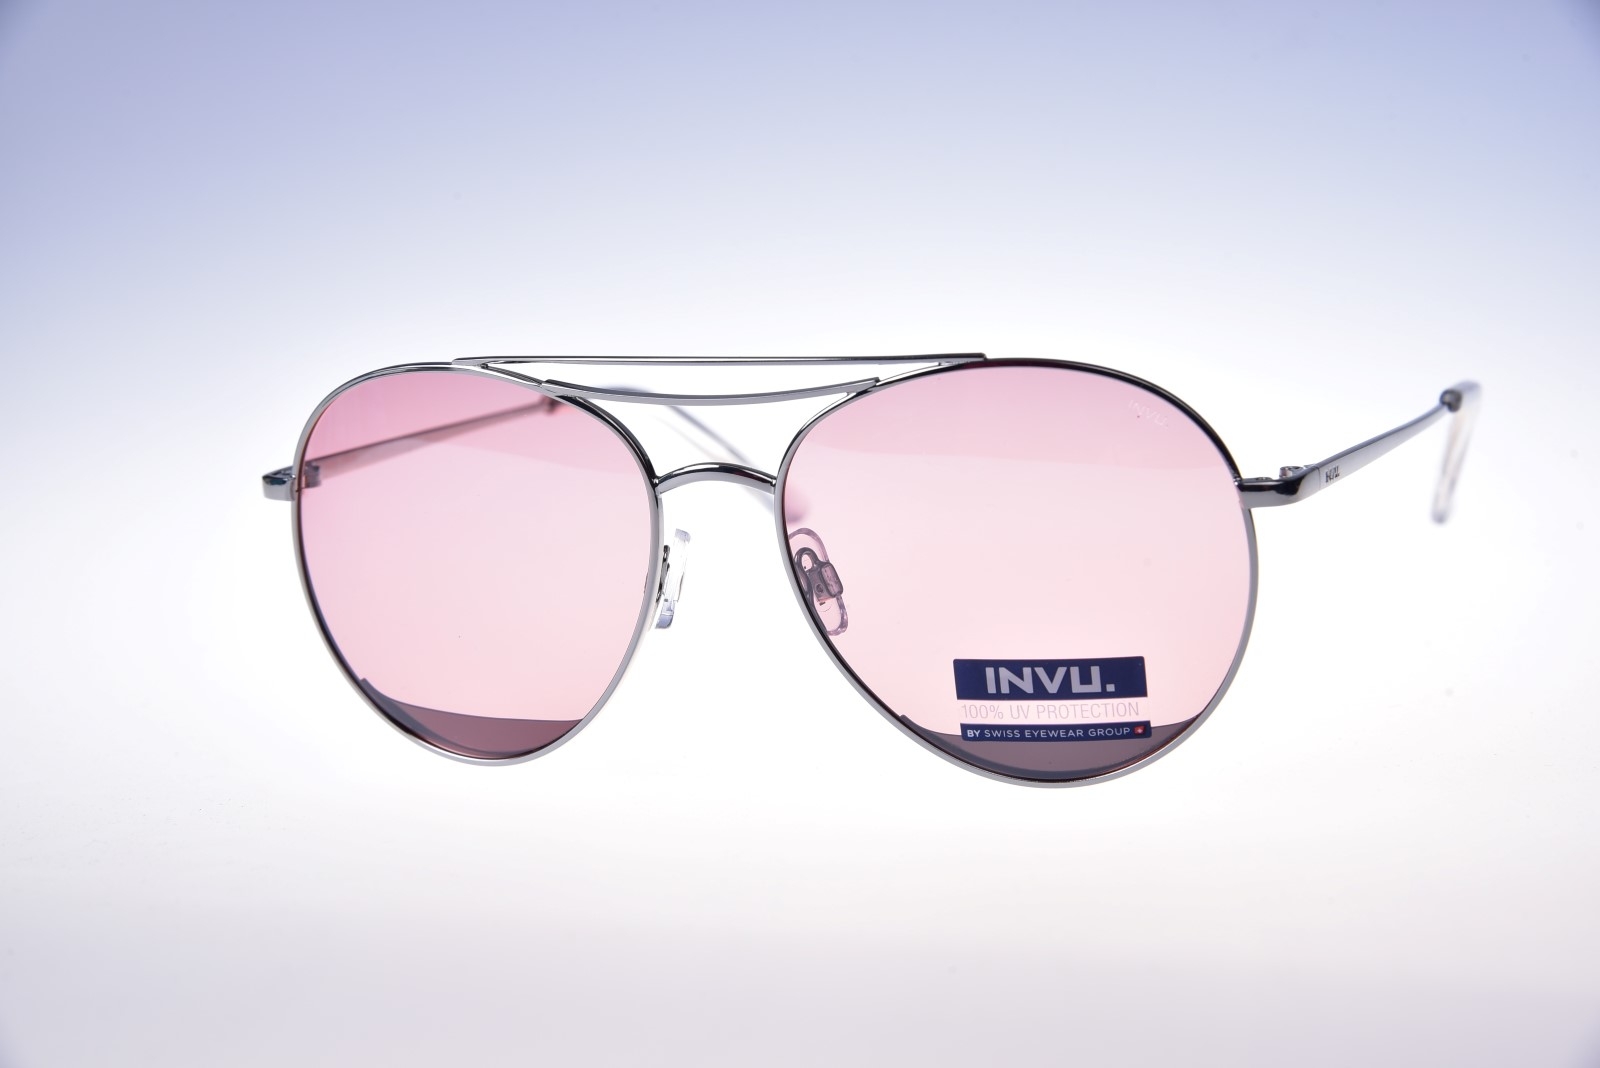 INVU. Trend T1912C - Dámske slnečné okuliare